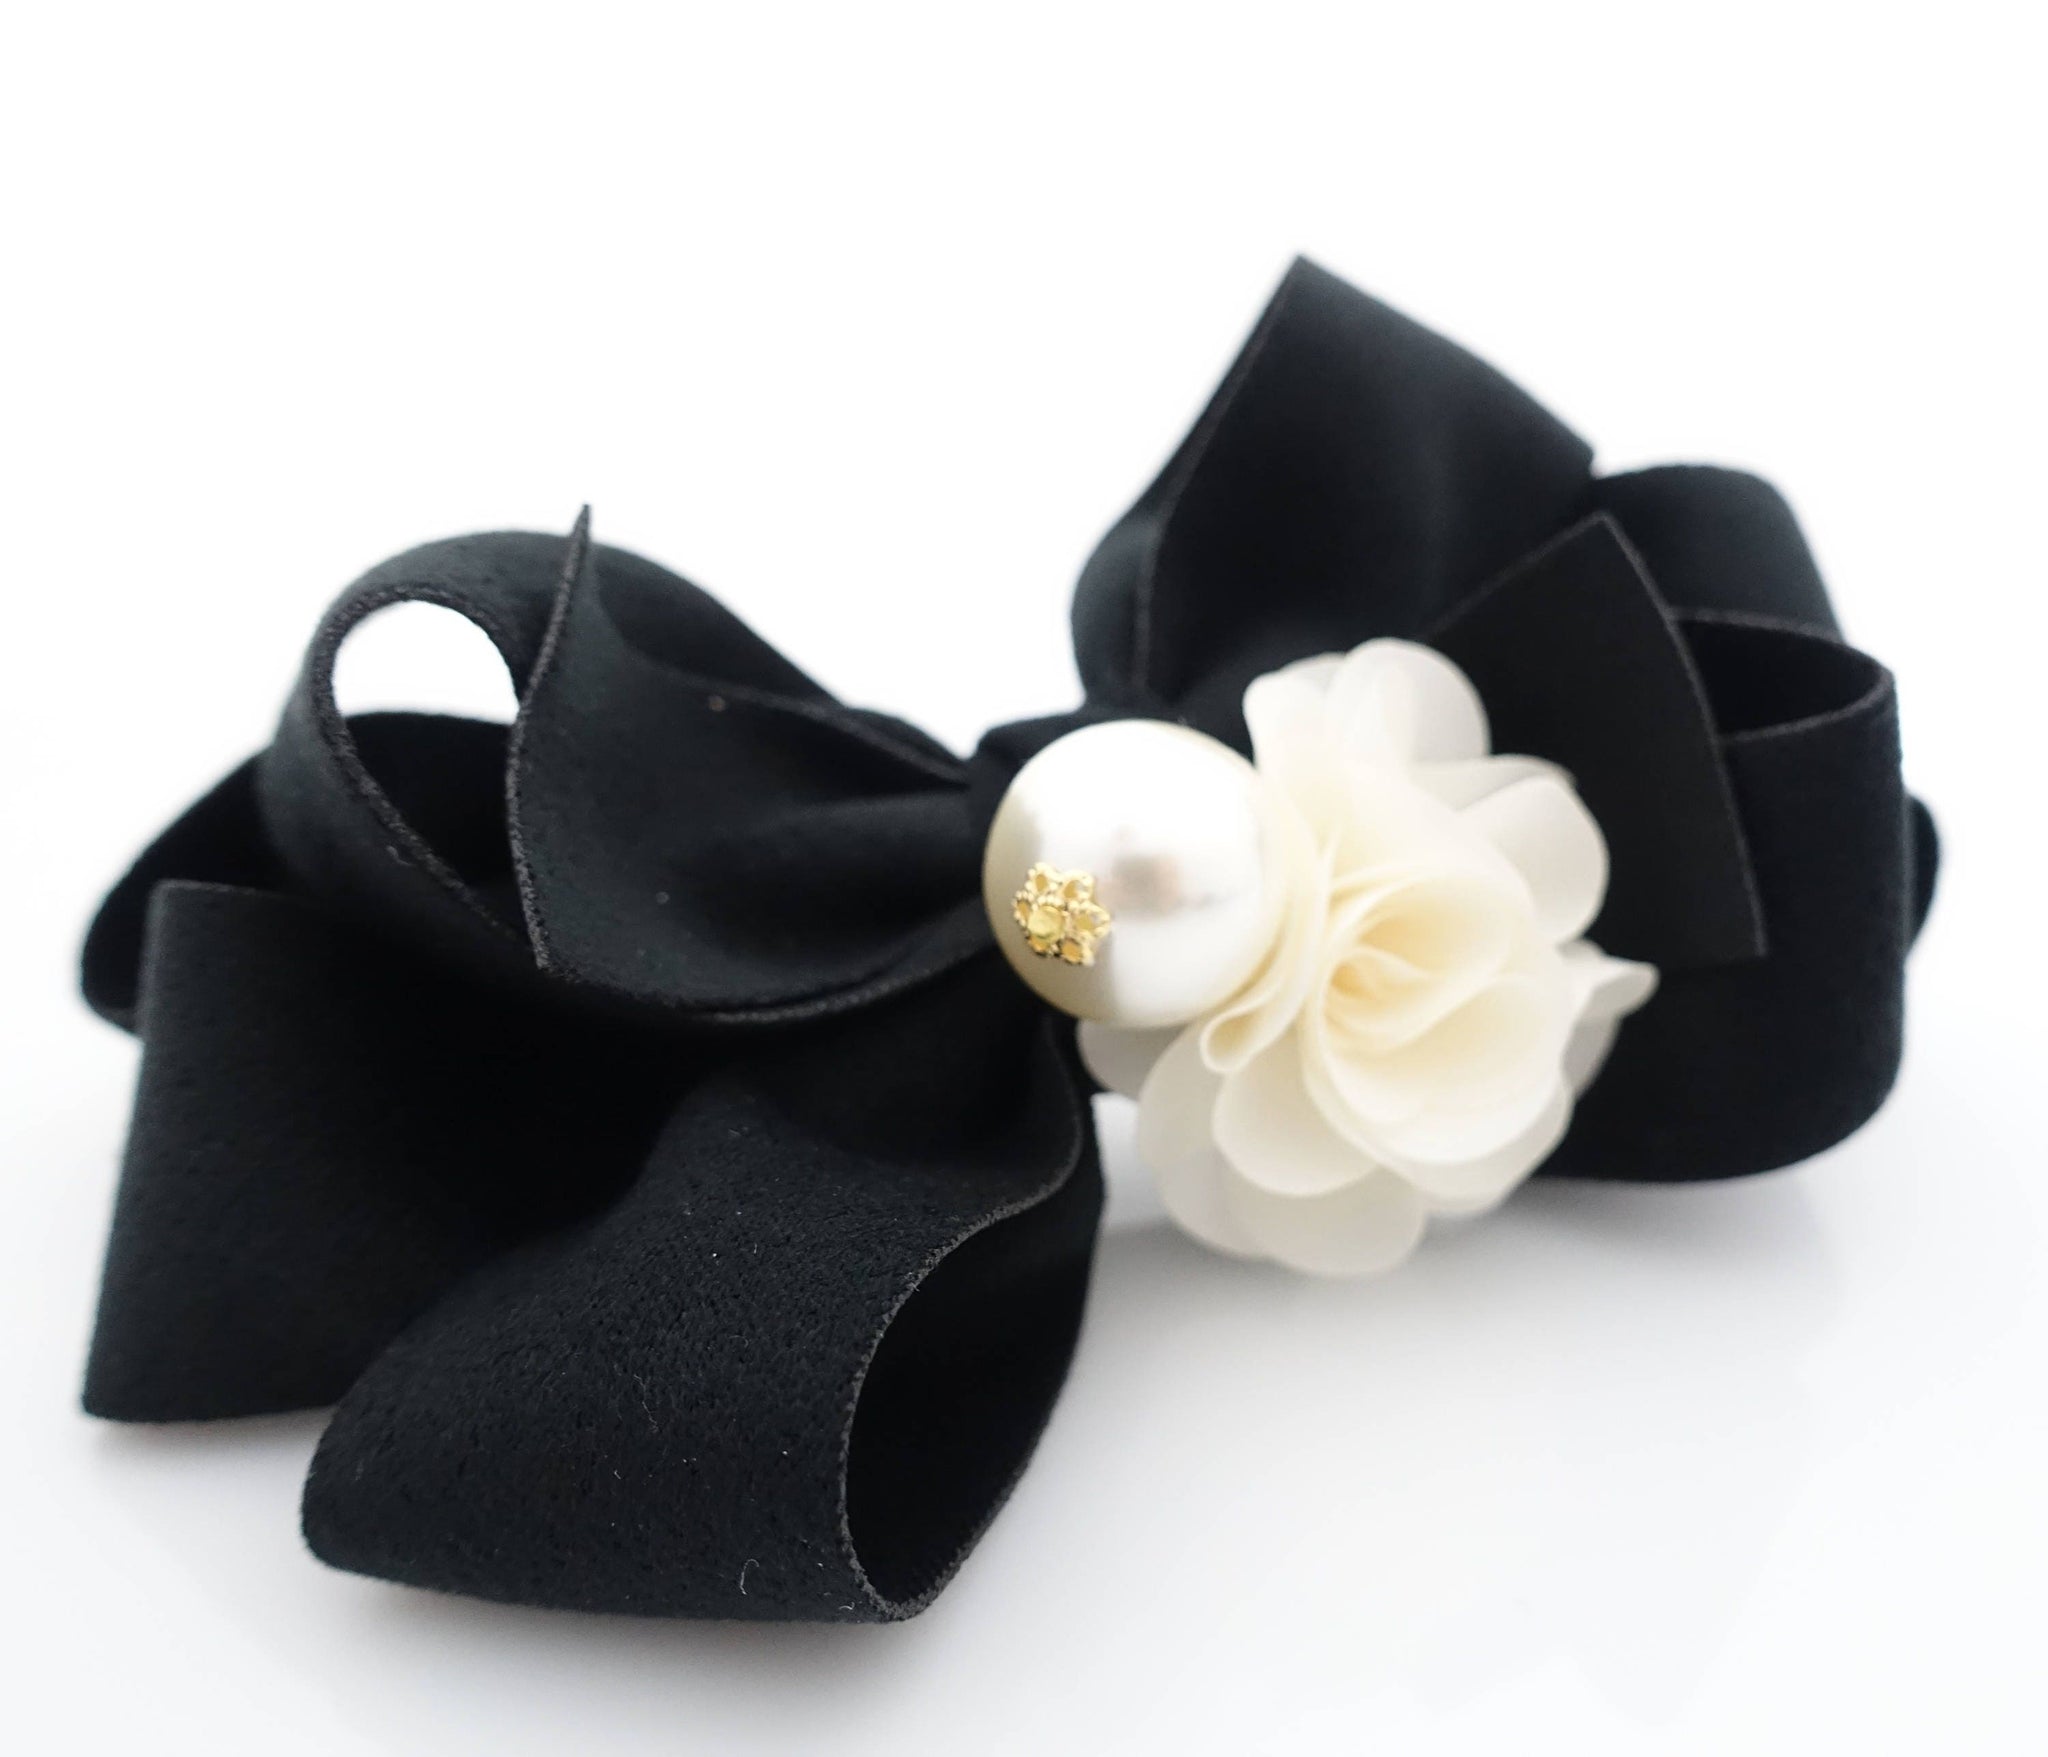 veryshine.com Barrette (Bow) Flower Sleek Ball Decorated Black Bow French Hair Barrette Women Accessory